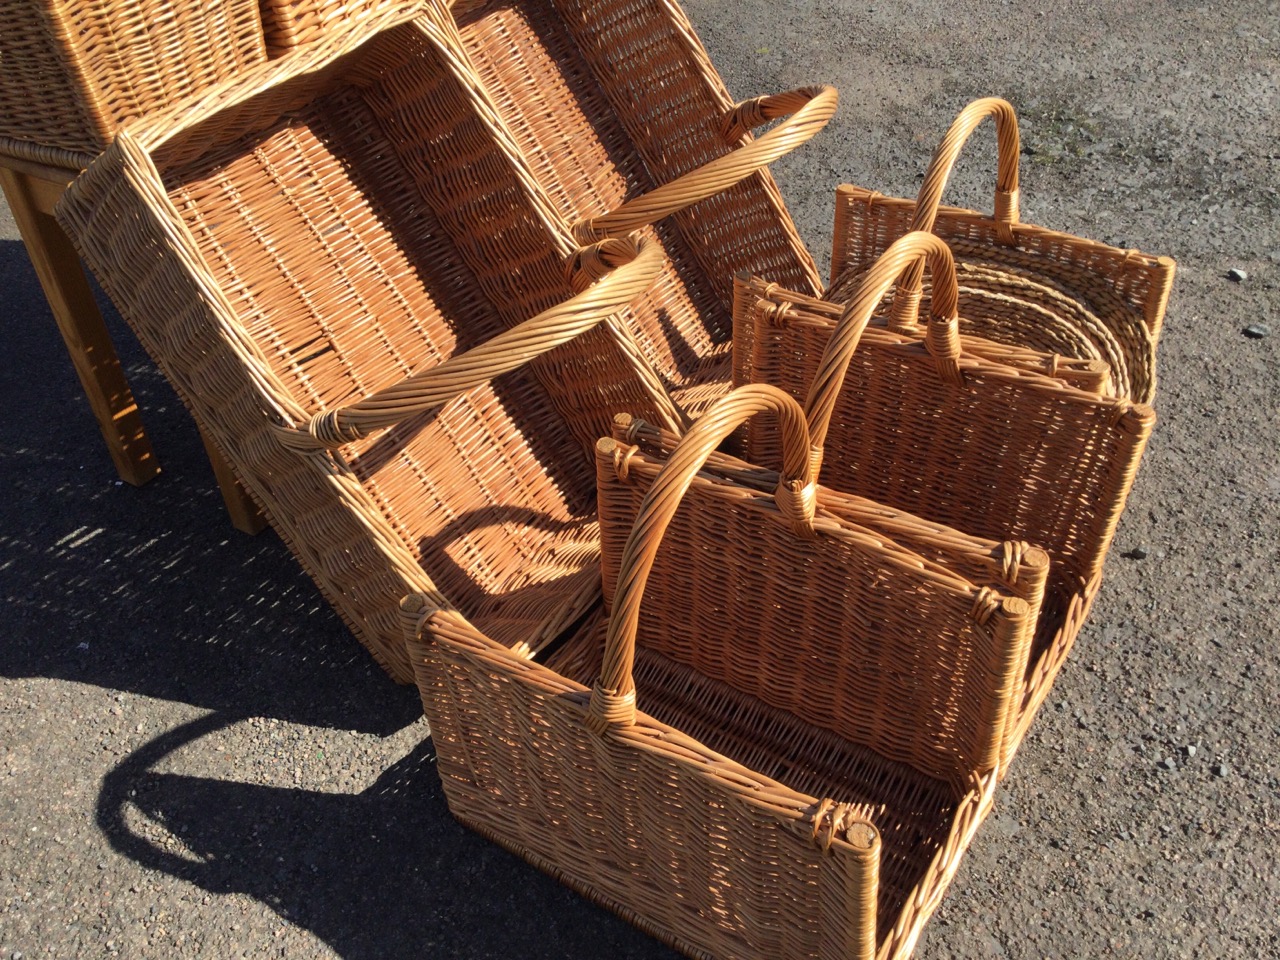 Miscellaneous wicker baskets including hamper style, pairs, rush placemats, bottle baskets, an - Bild 2 aus 3